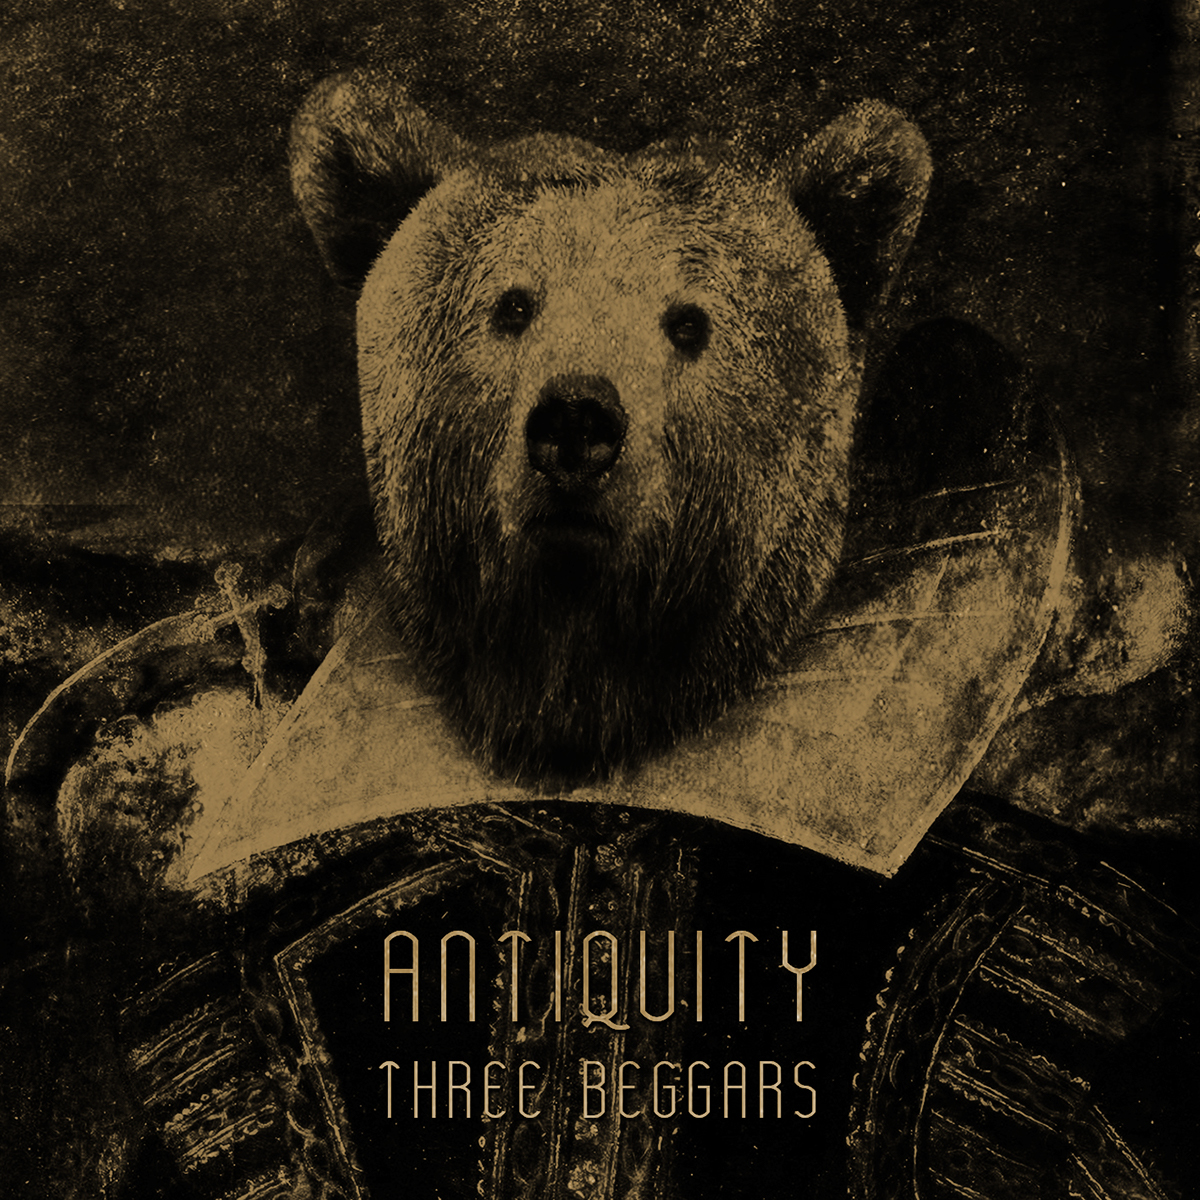 Gladiator bear surreal tyrants three beggars graphics design CD cover aidan mooney CAD art album art